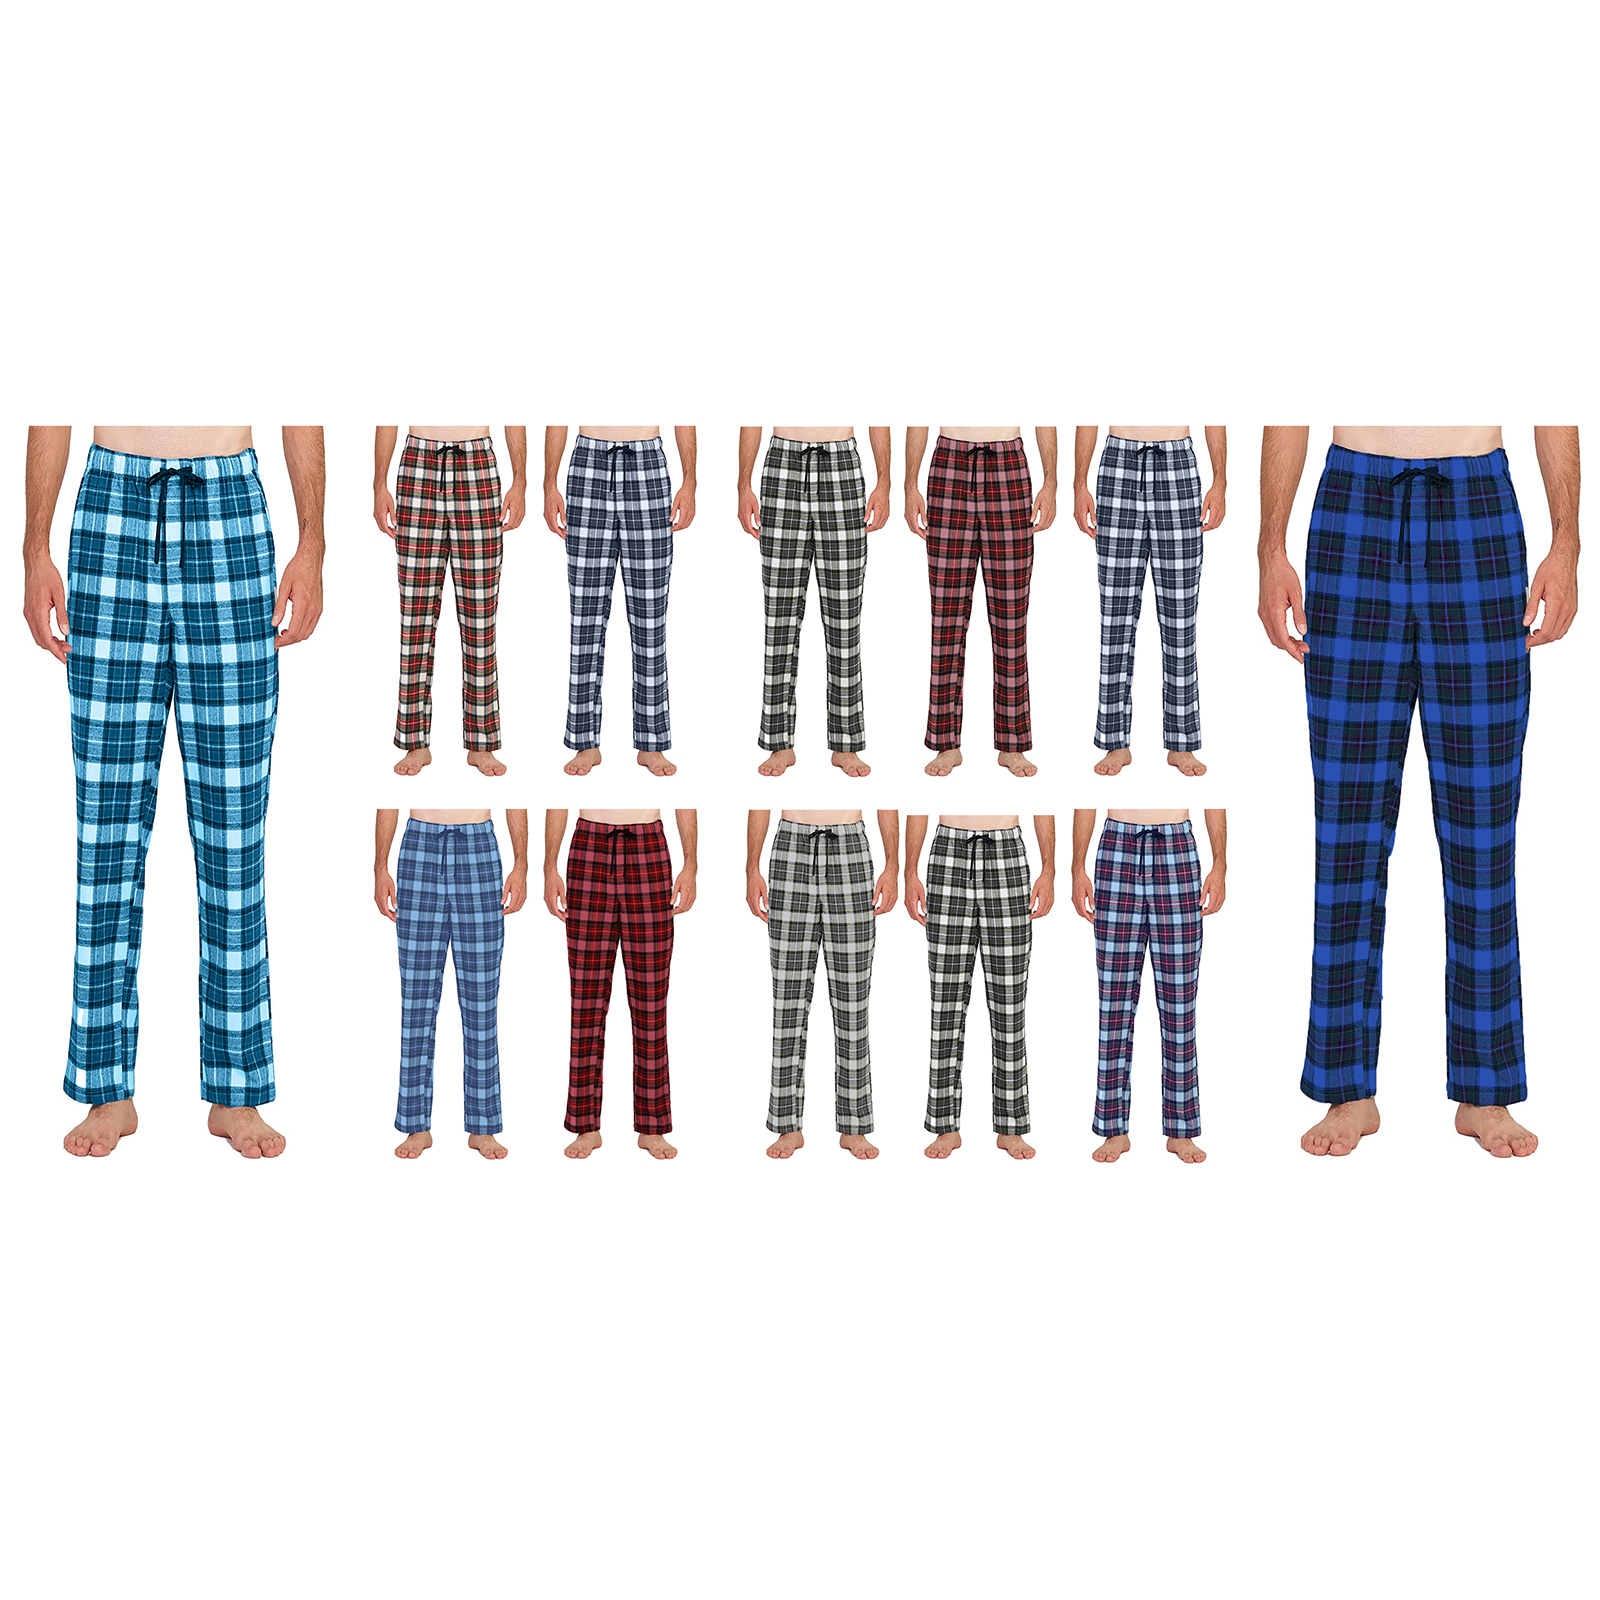 Men's Soft 100% Cotton Flannel Plaid Lounge Pajama Sleep Pants - 3-Pack, X-Large